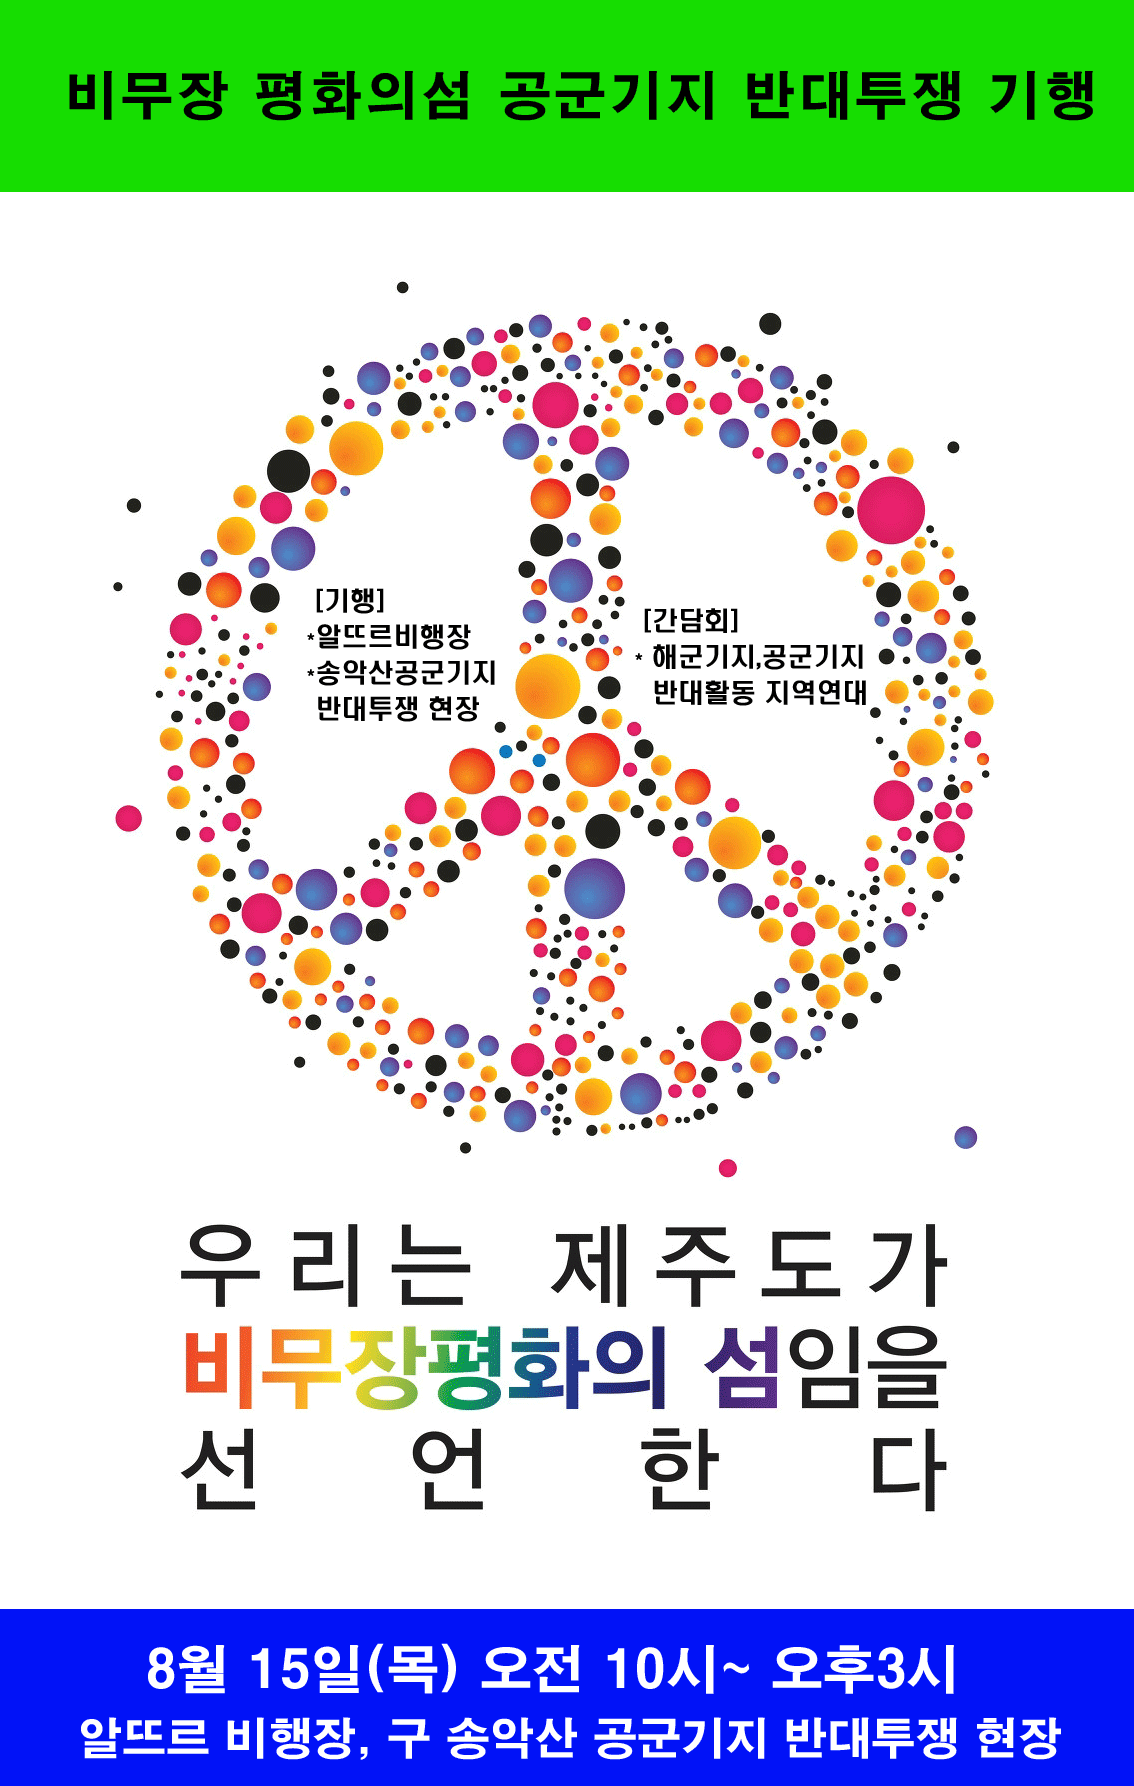 Korean banner for the 3rd meeting.